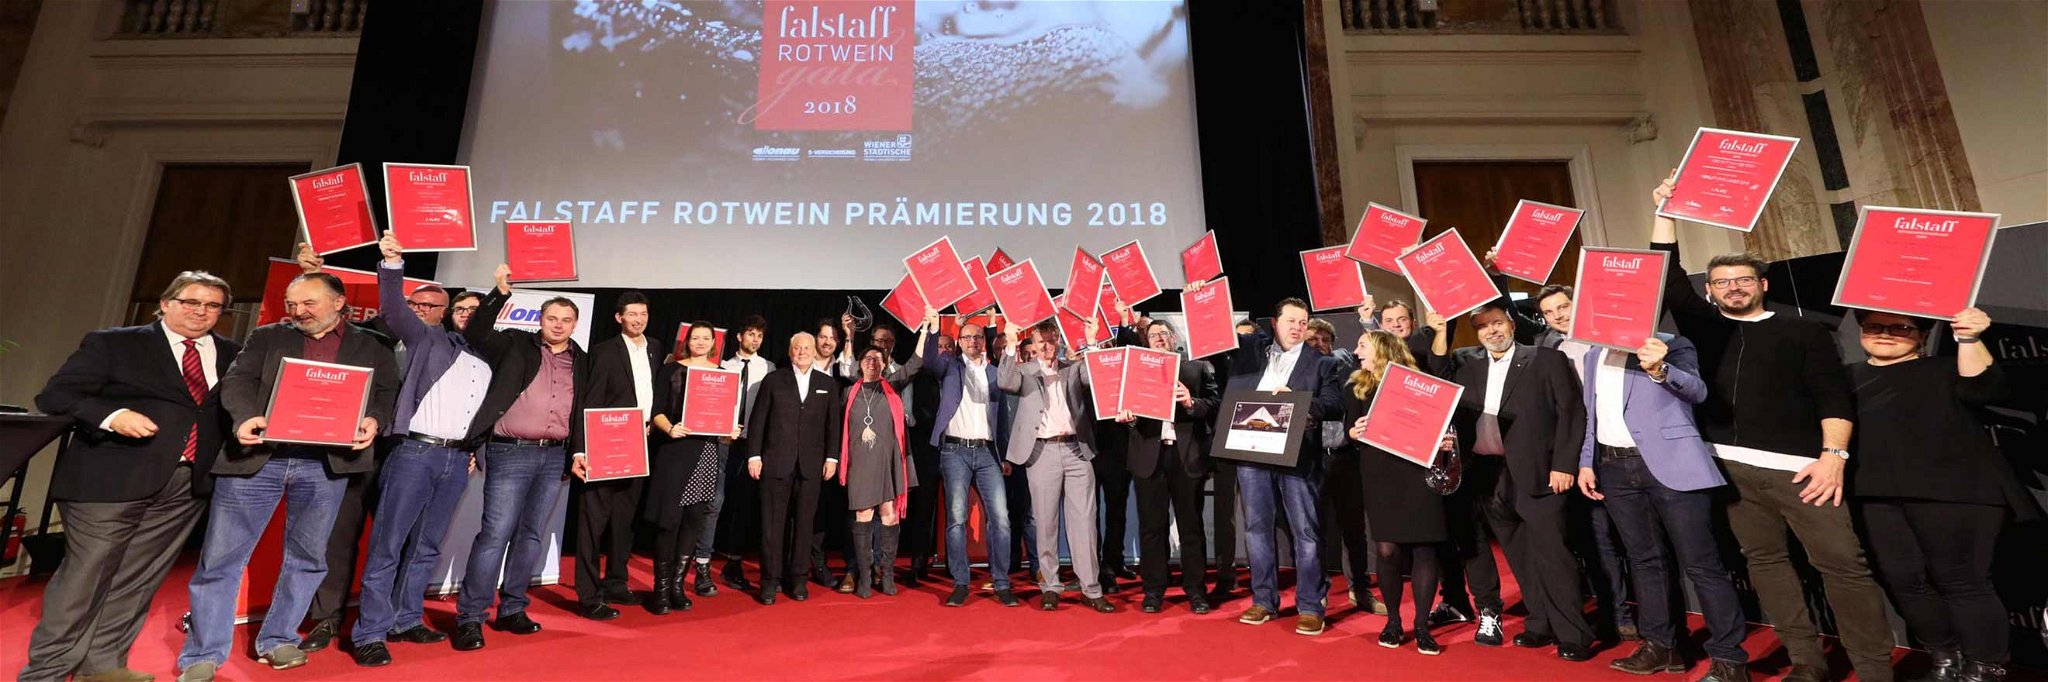 Alle Preisträger aus dem Falstaff Rotweinguide 2019.